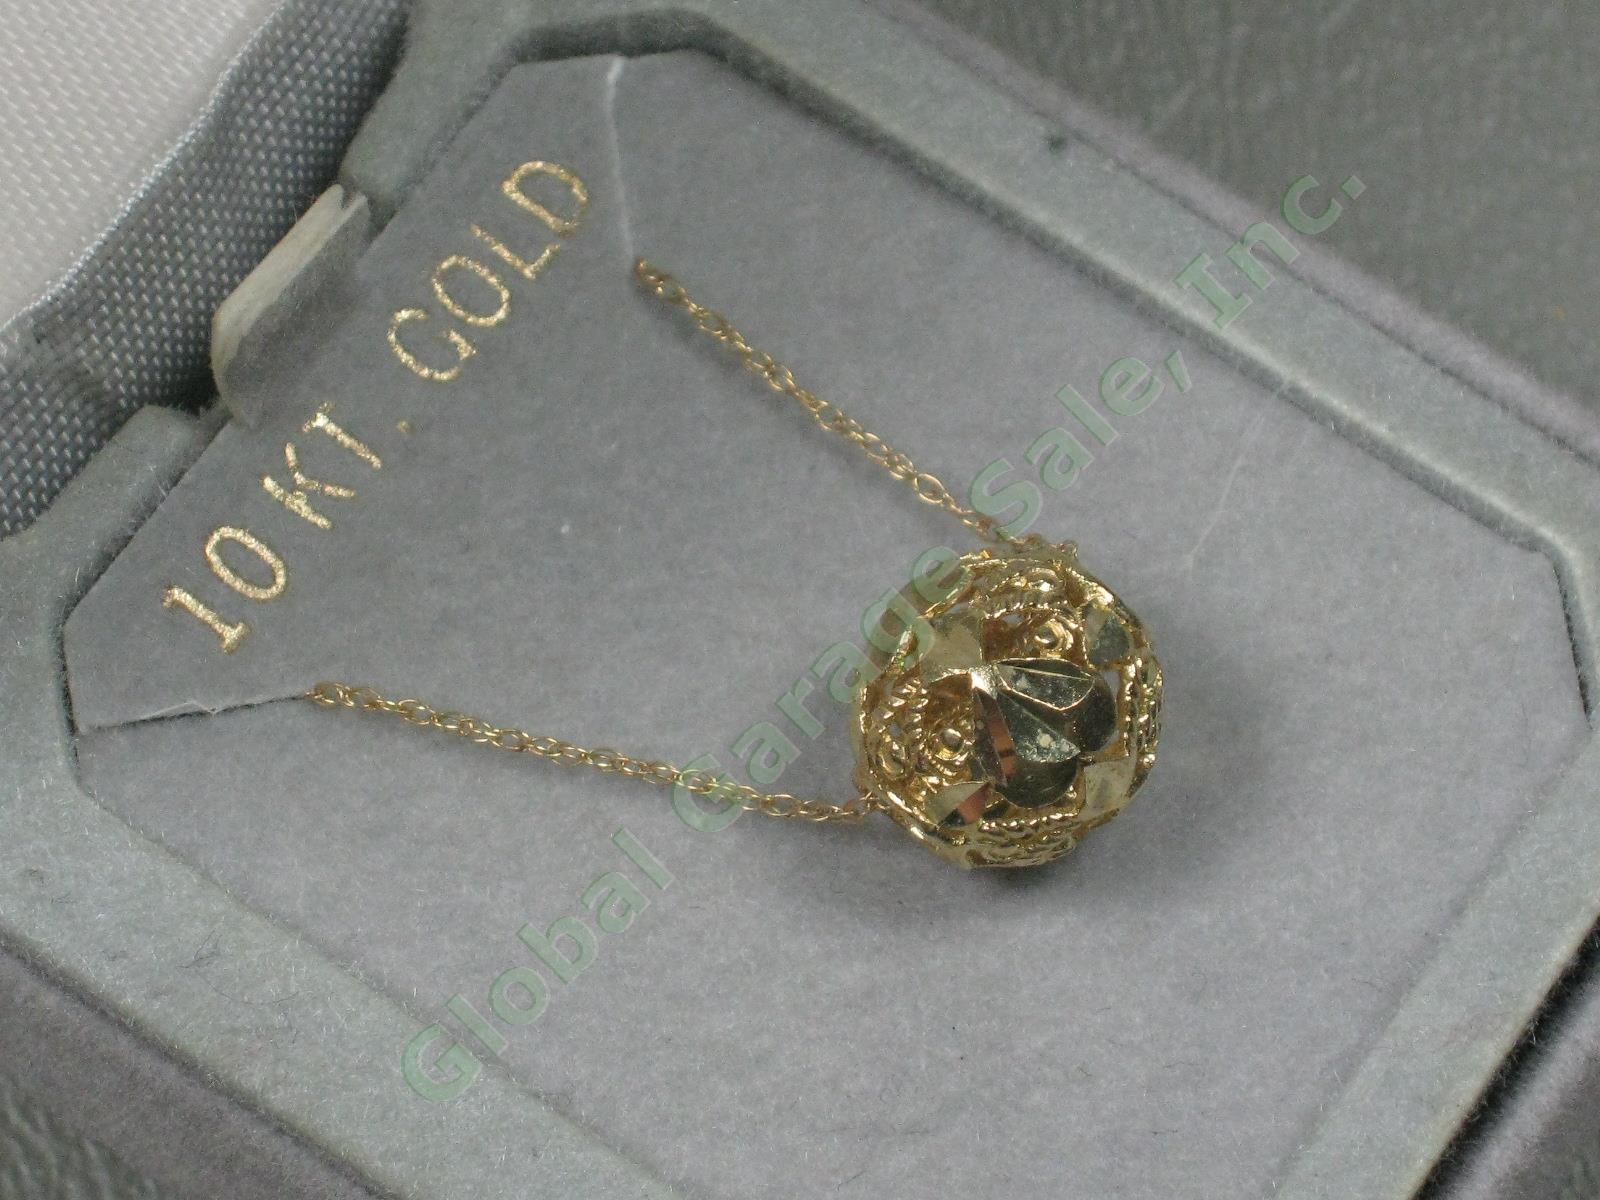 Jewelry Watch Gemstone Lot Sterling Silver 10K 14K Yellow Gold Earring Necklace+ 6